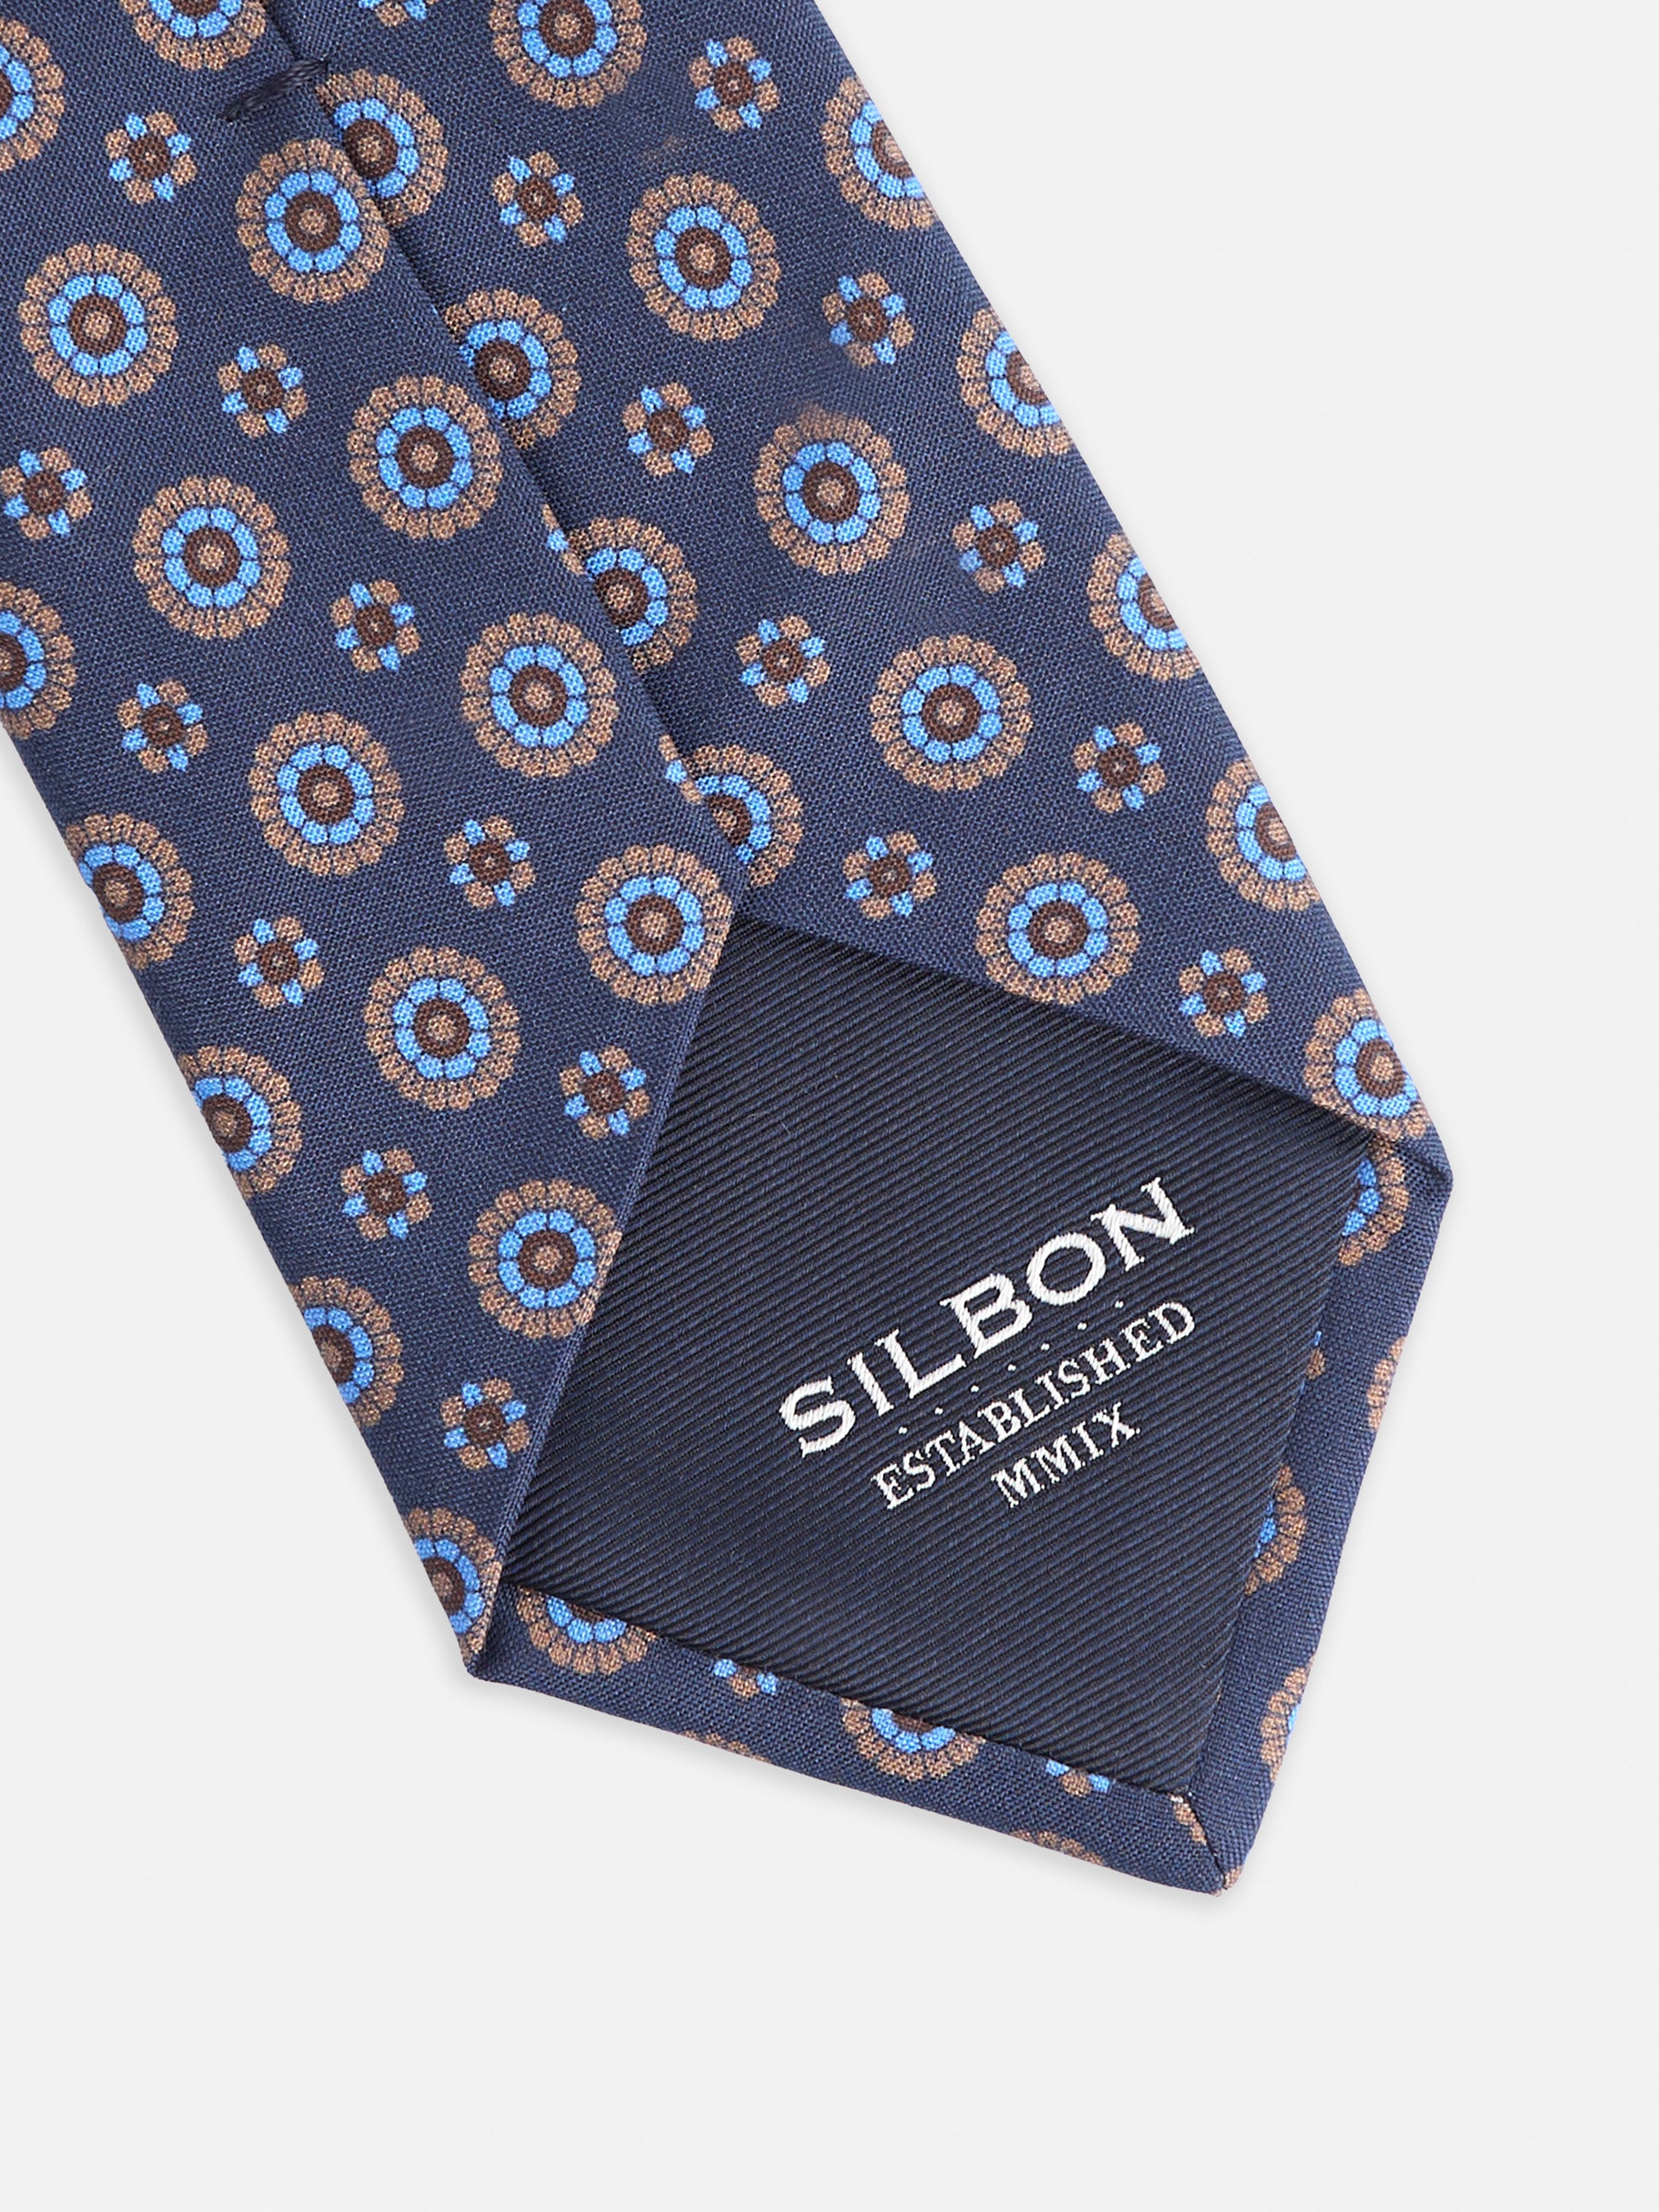 Corbata motivo floral azul marino